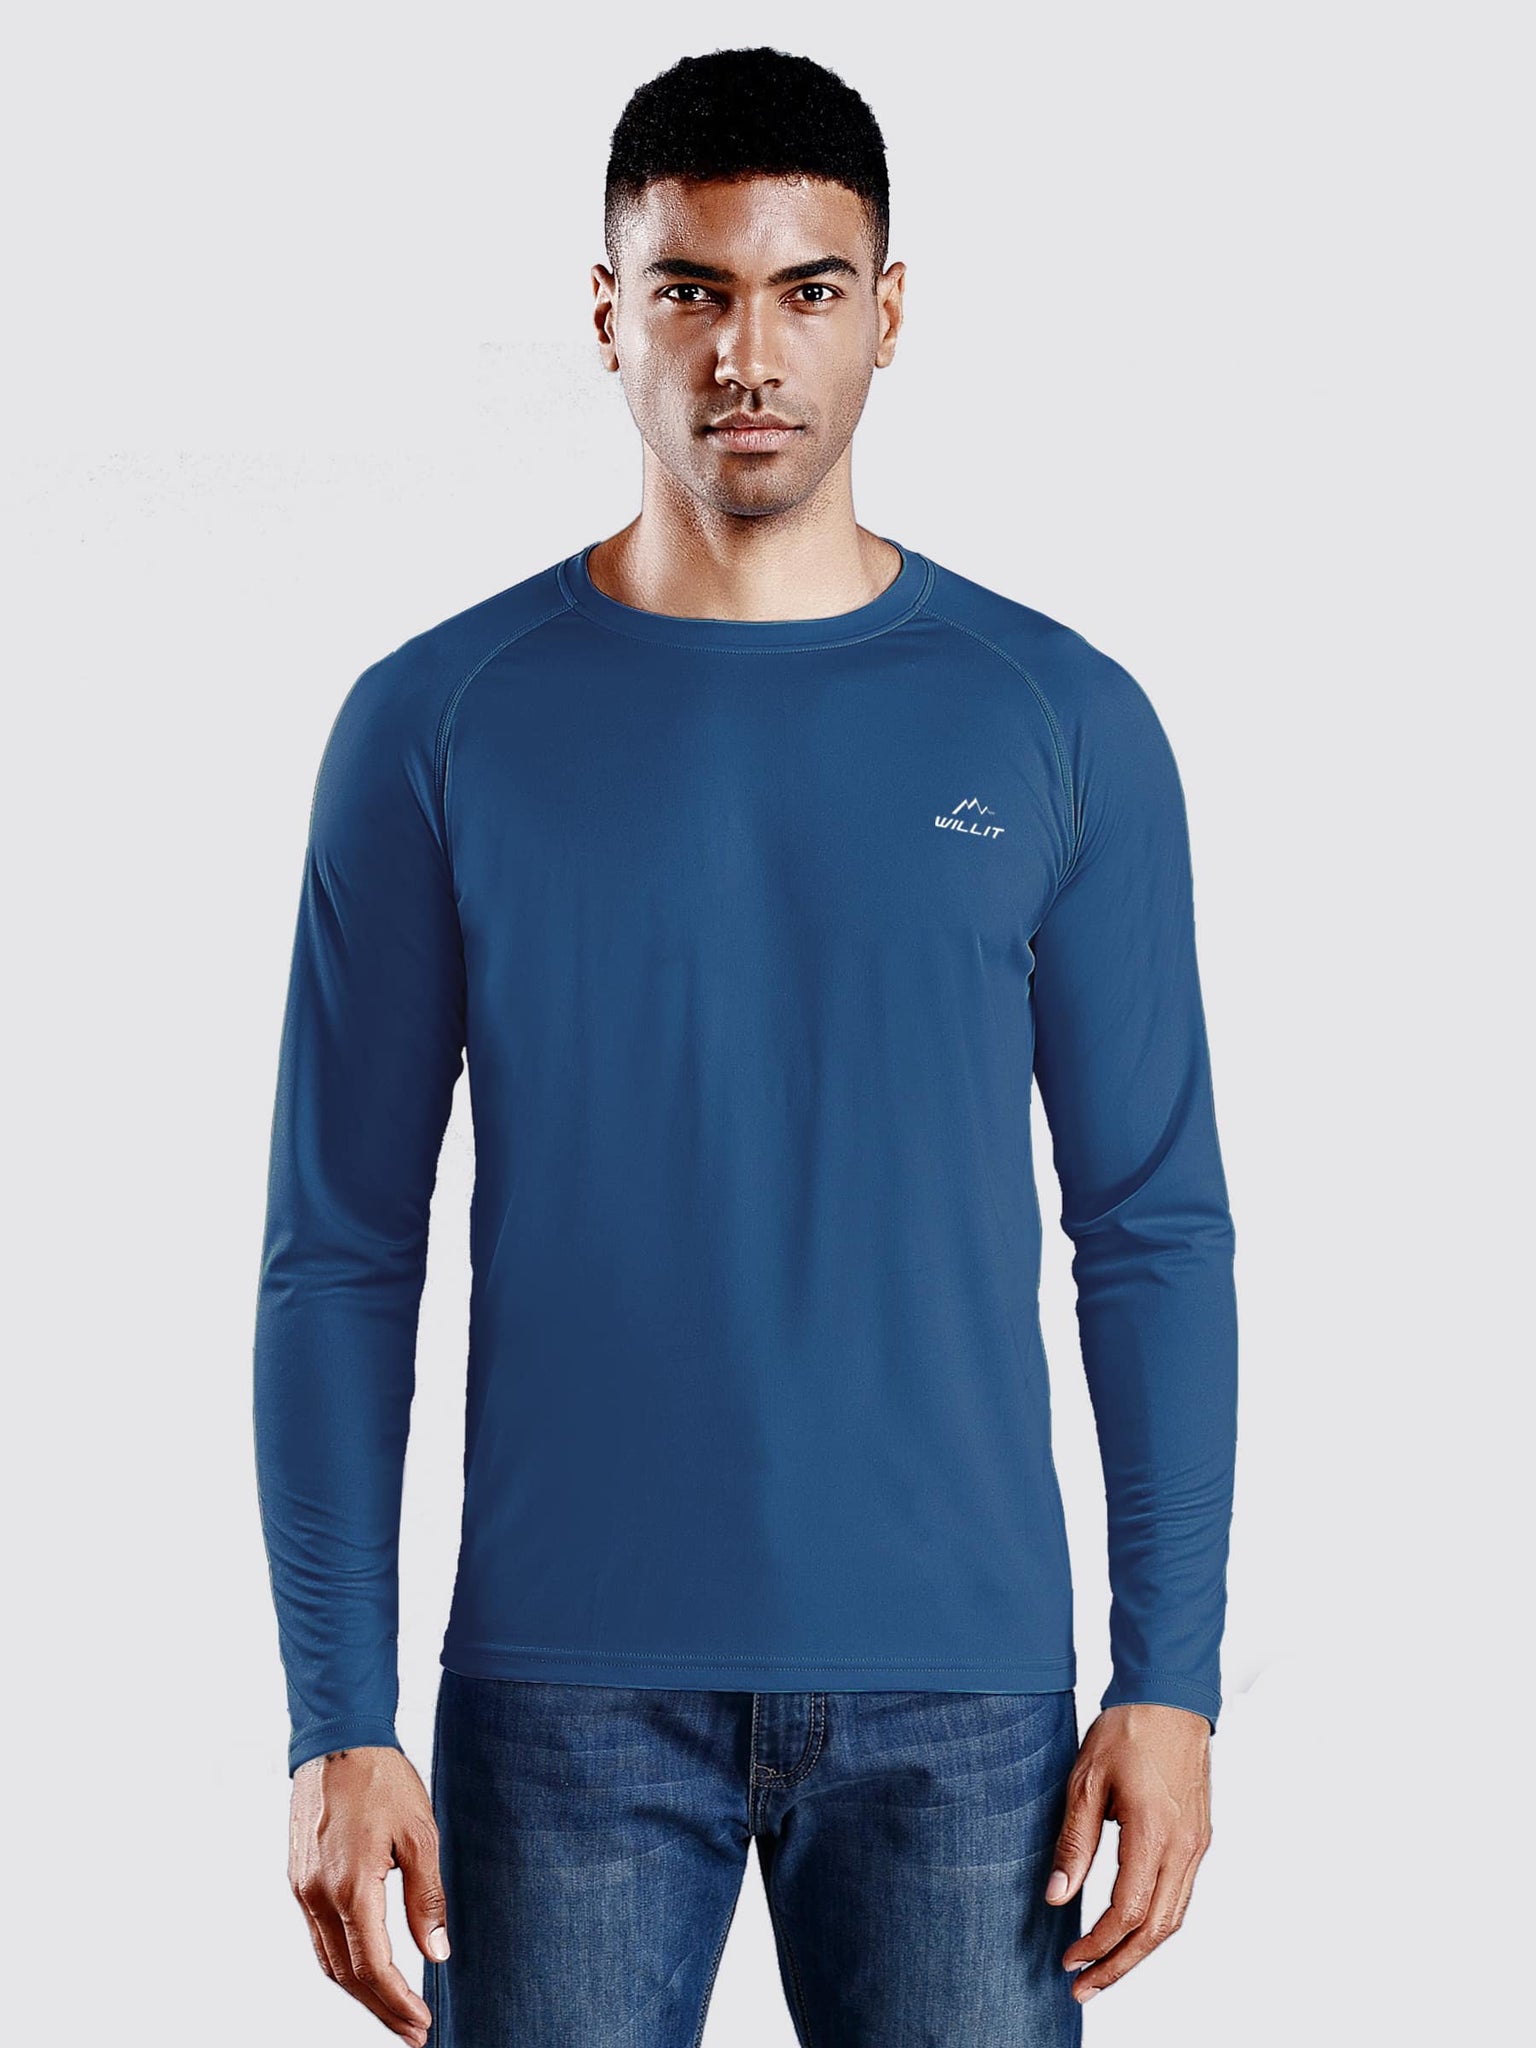 Willit Men's Sun Protection Long Sleeve Shirts_Ocean Blue_model4